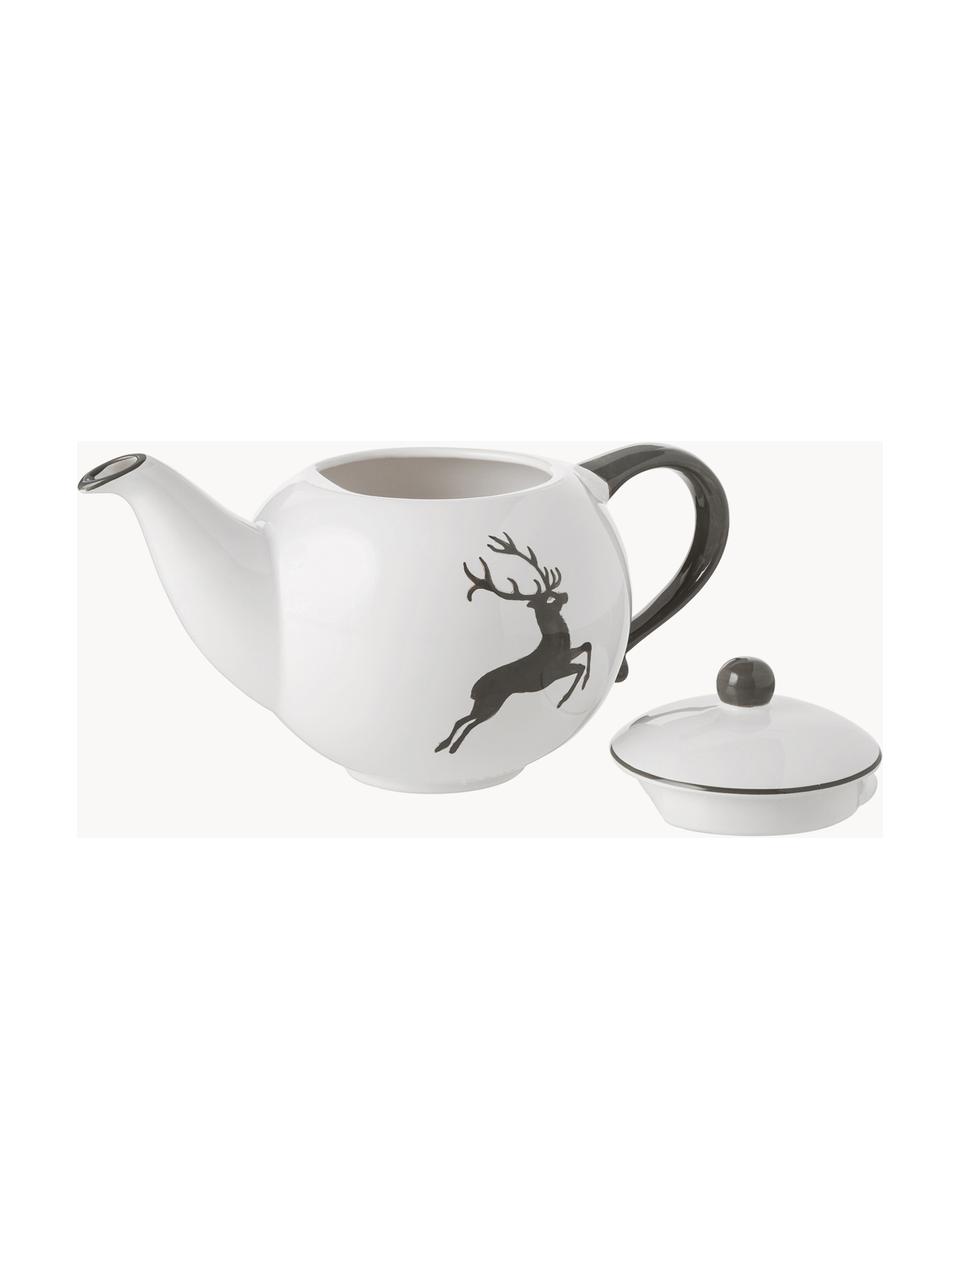 Handgefertigte Teekanne Grauer Hirsch, 500 ml, Keramik, Weiß, Grau, 1.5 L